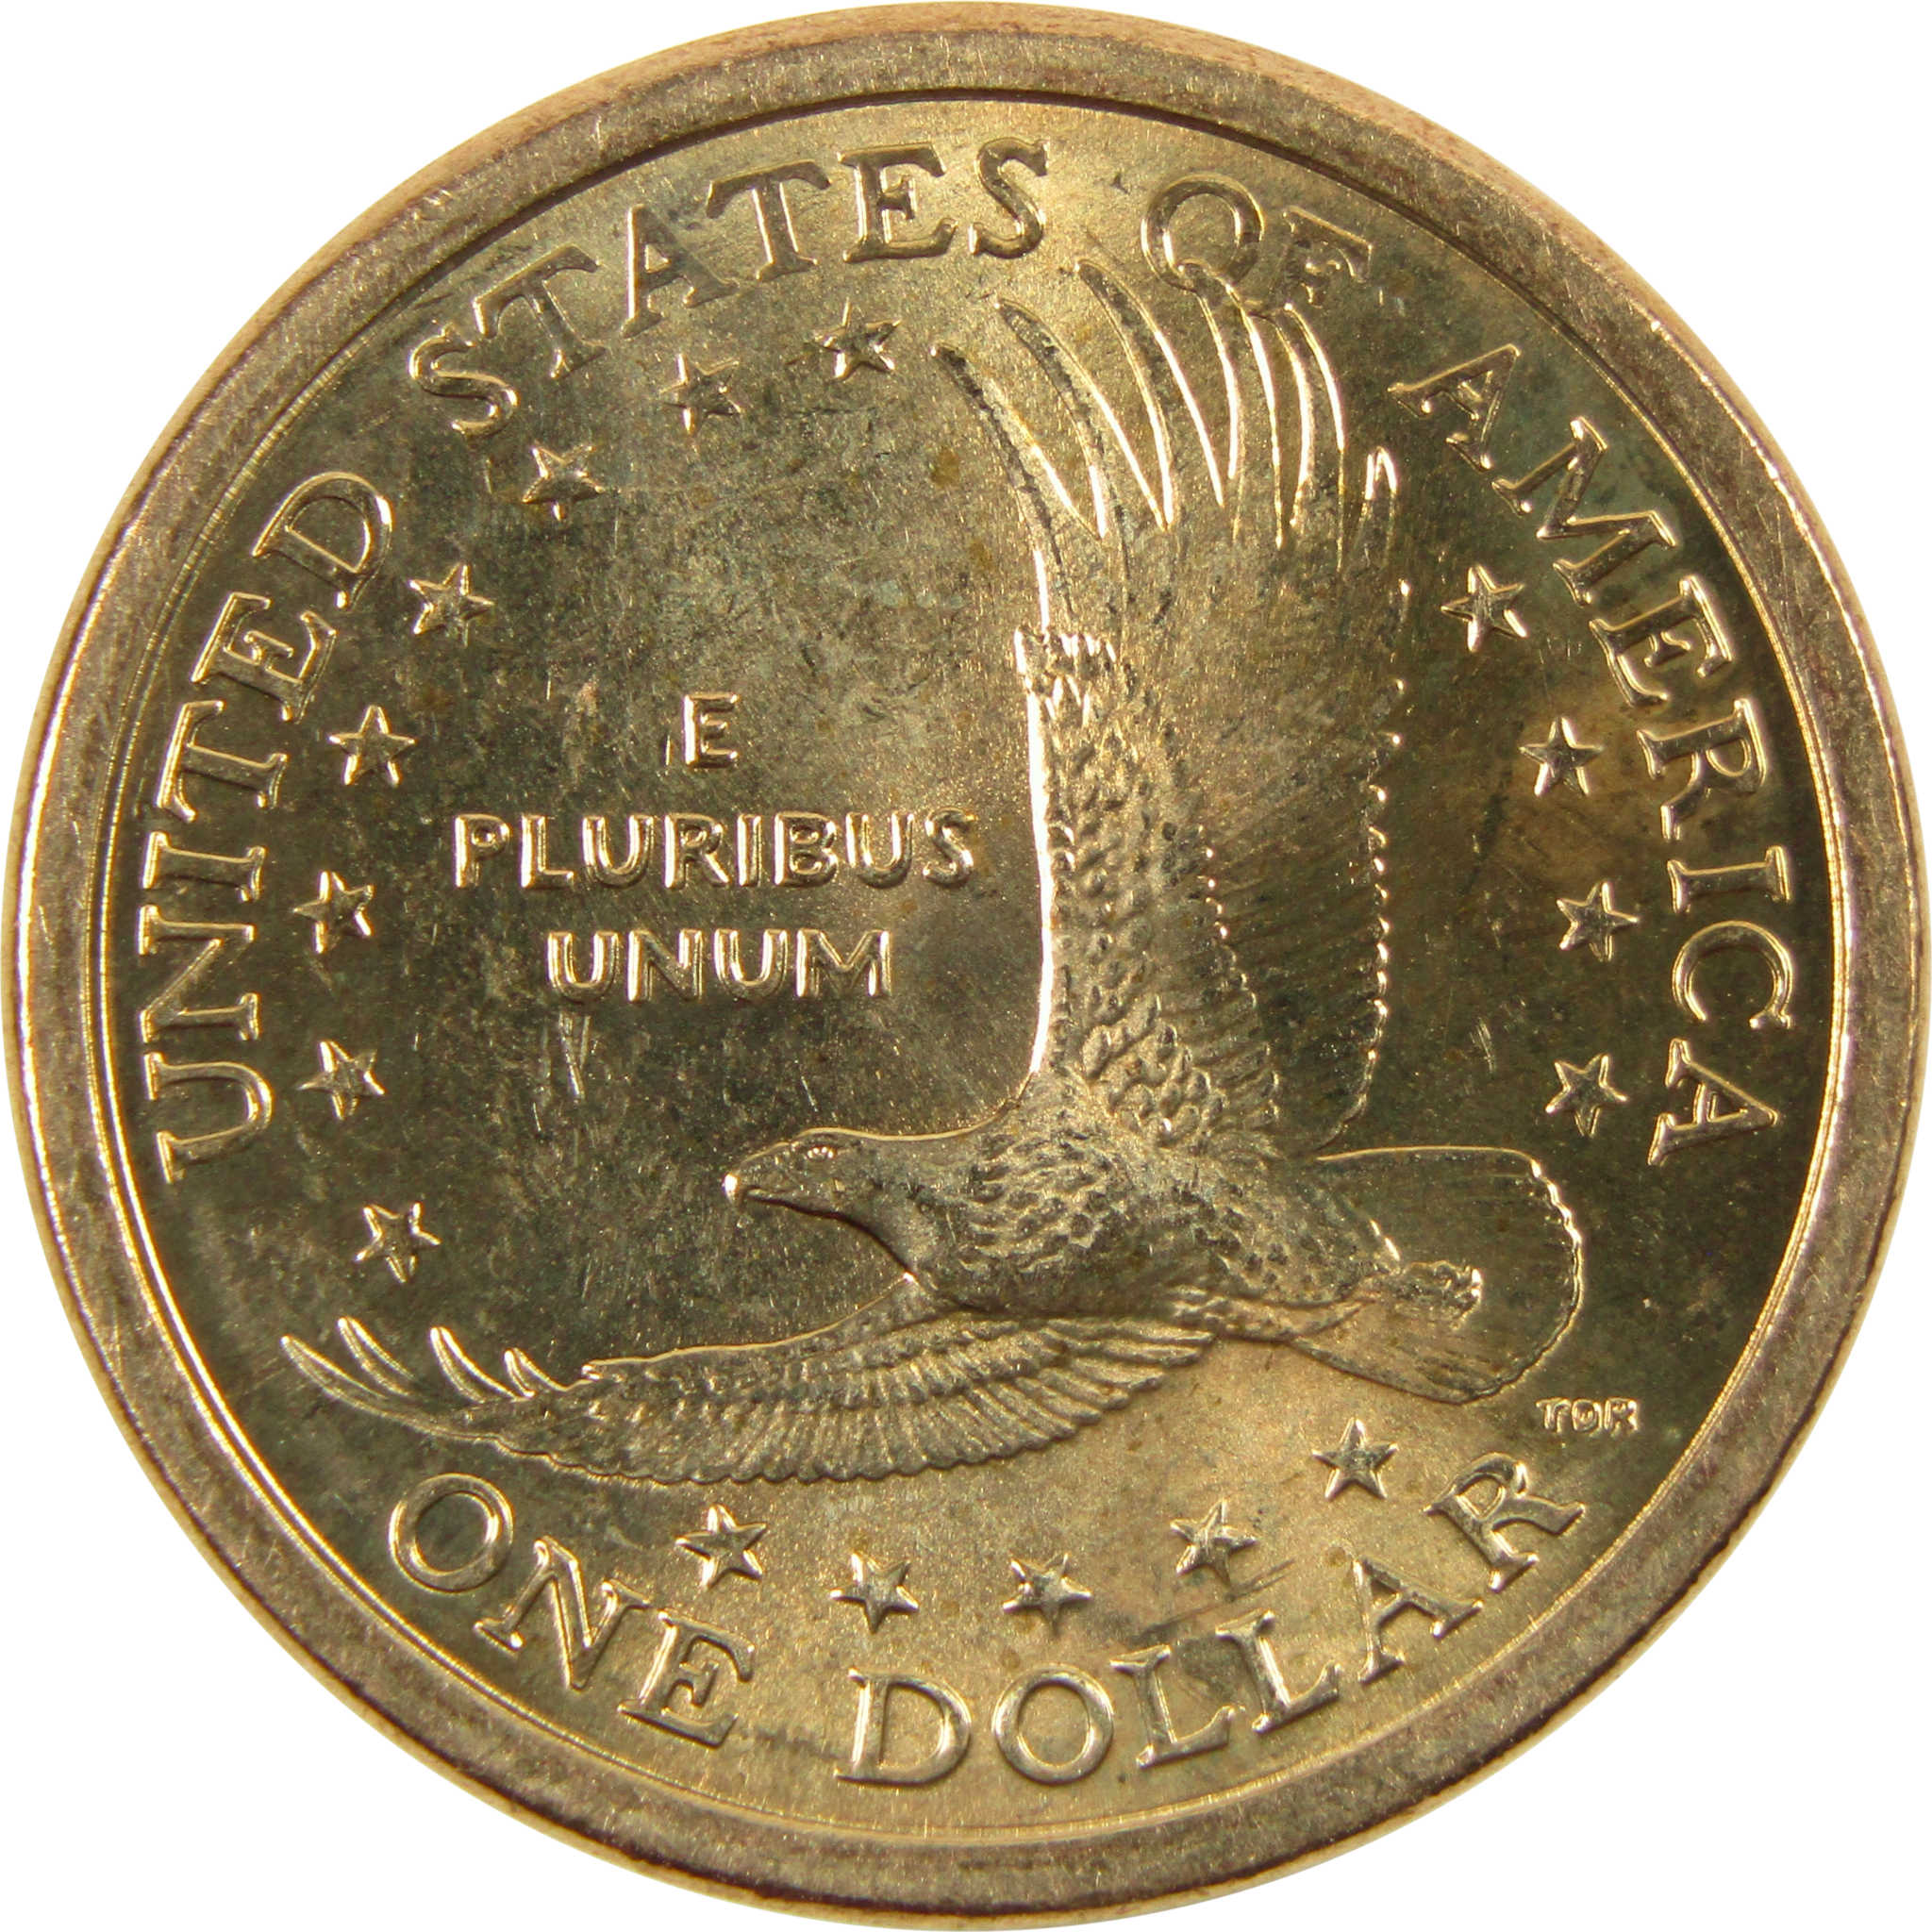 2005 D Sacagawea Native American Dollar BU Uncirculated $1 Coin